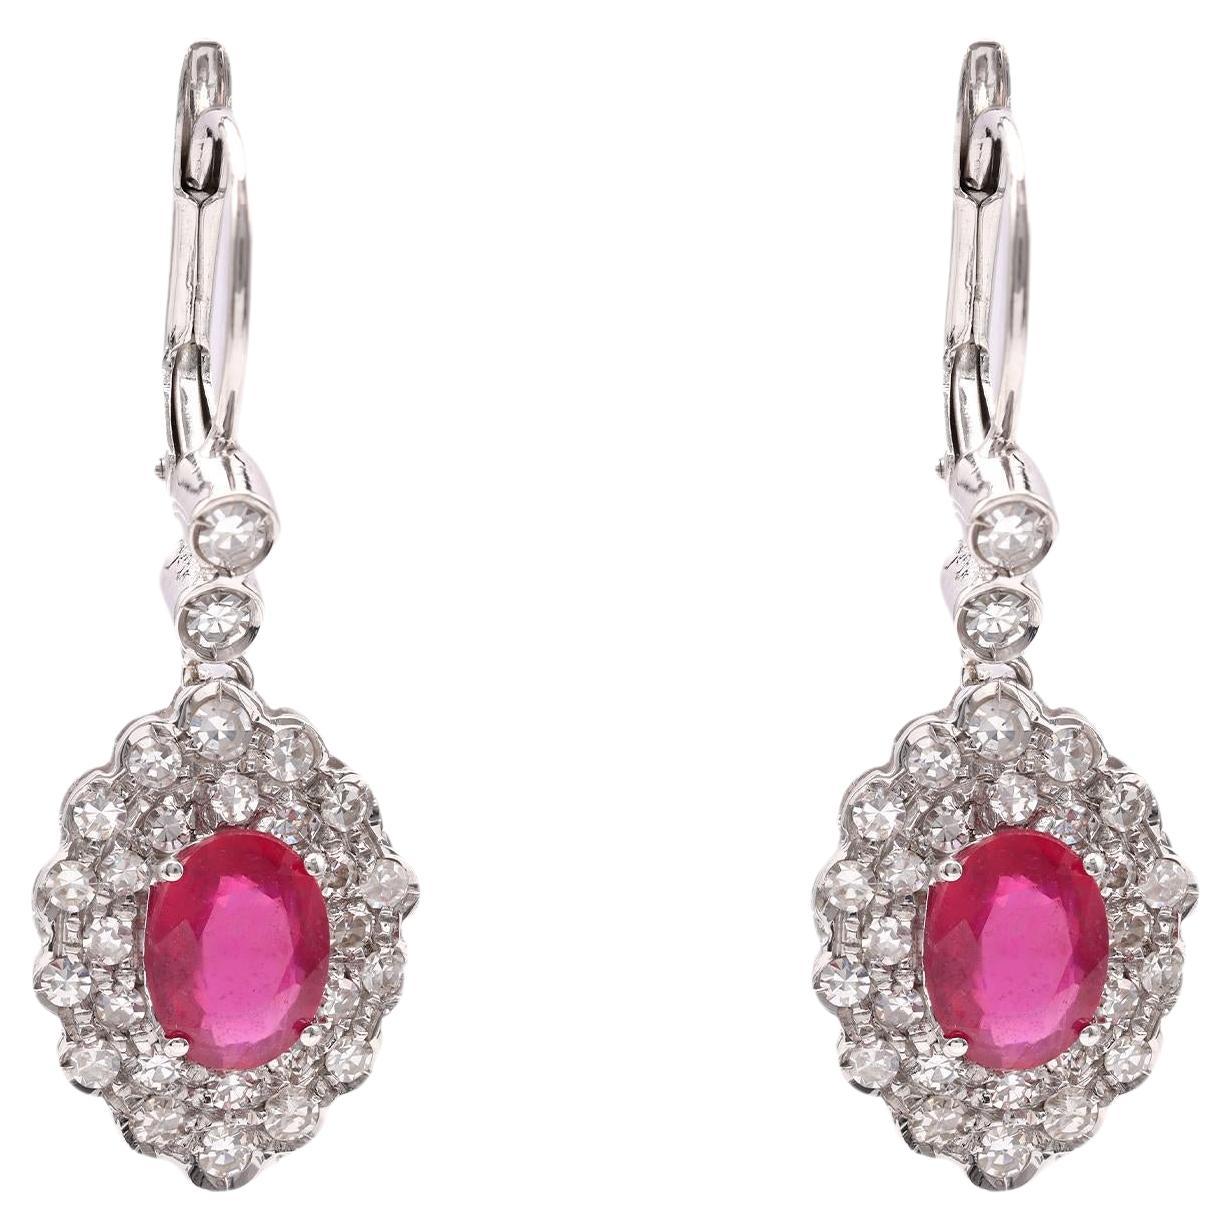 Pair of Art Deco Revival Ruby Diamond 18k White Gold Drop Earrings For Sale